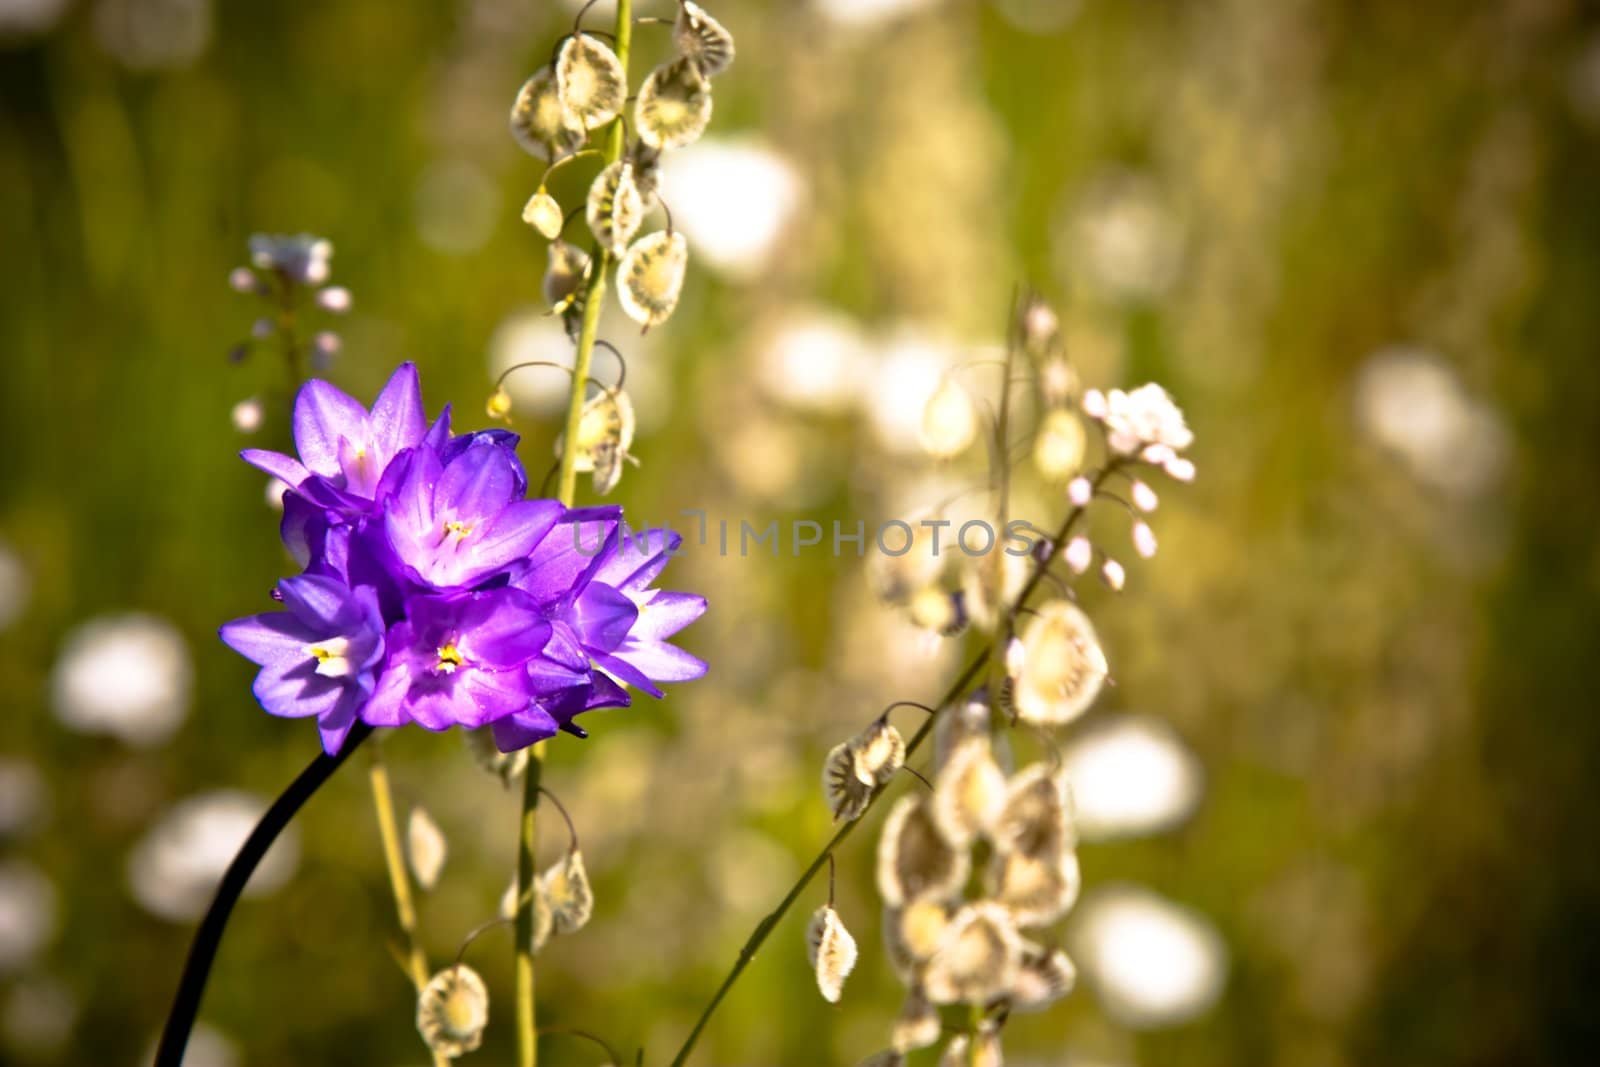 Grunge image of a purple flower in field of white wild flowers